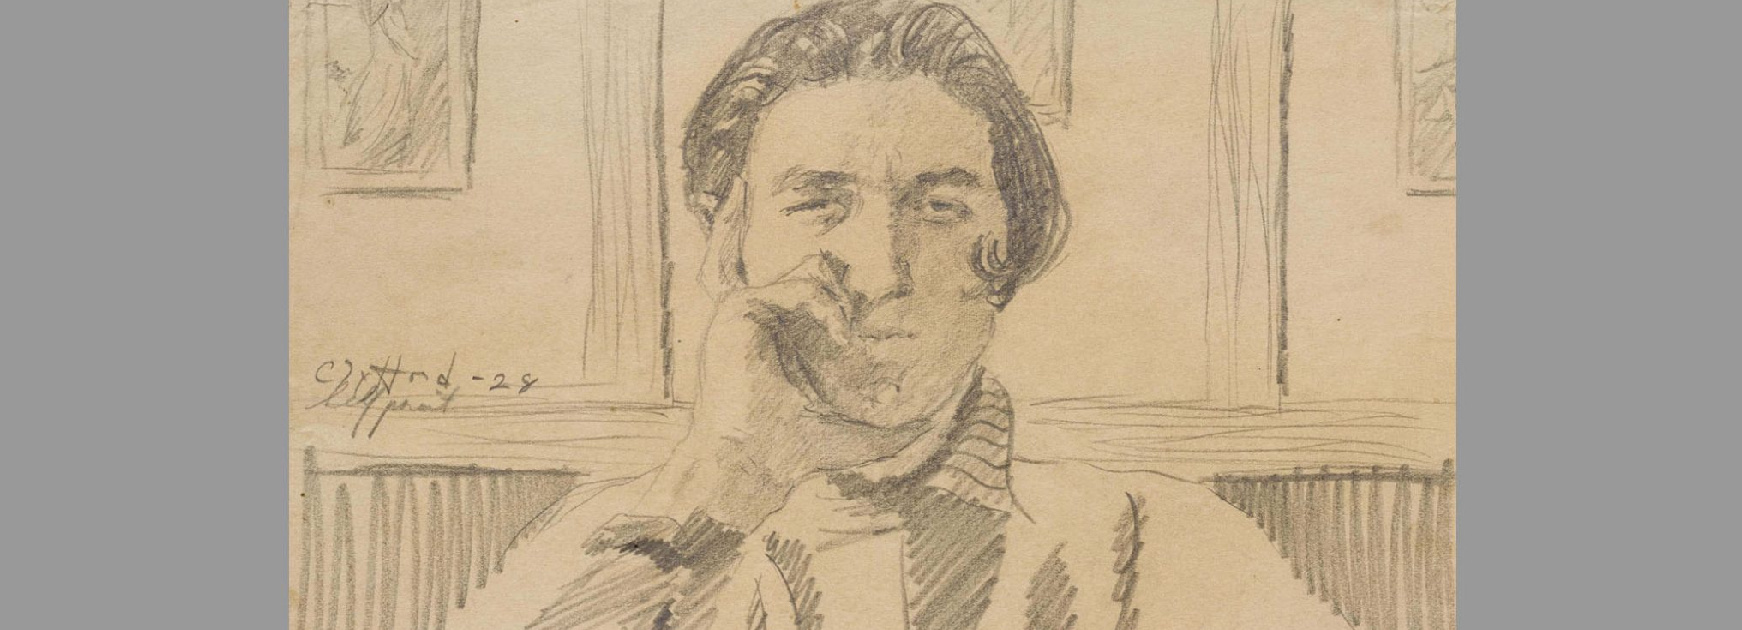 Graphite on paper self-portrait of Clyfford Still in 1928